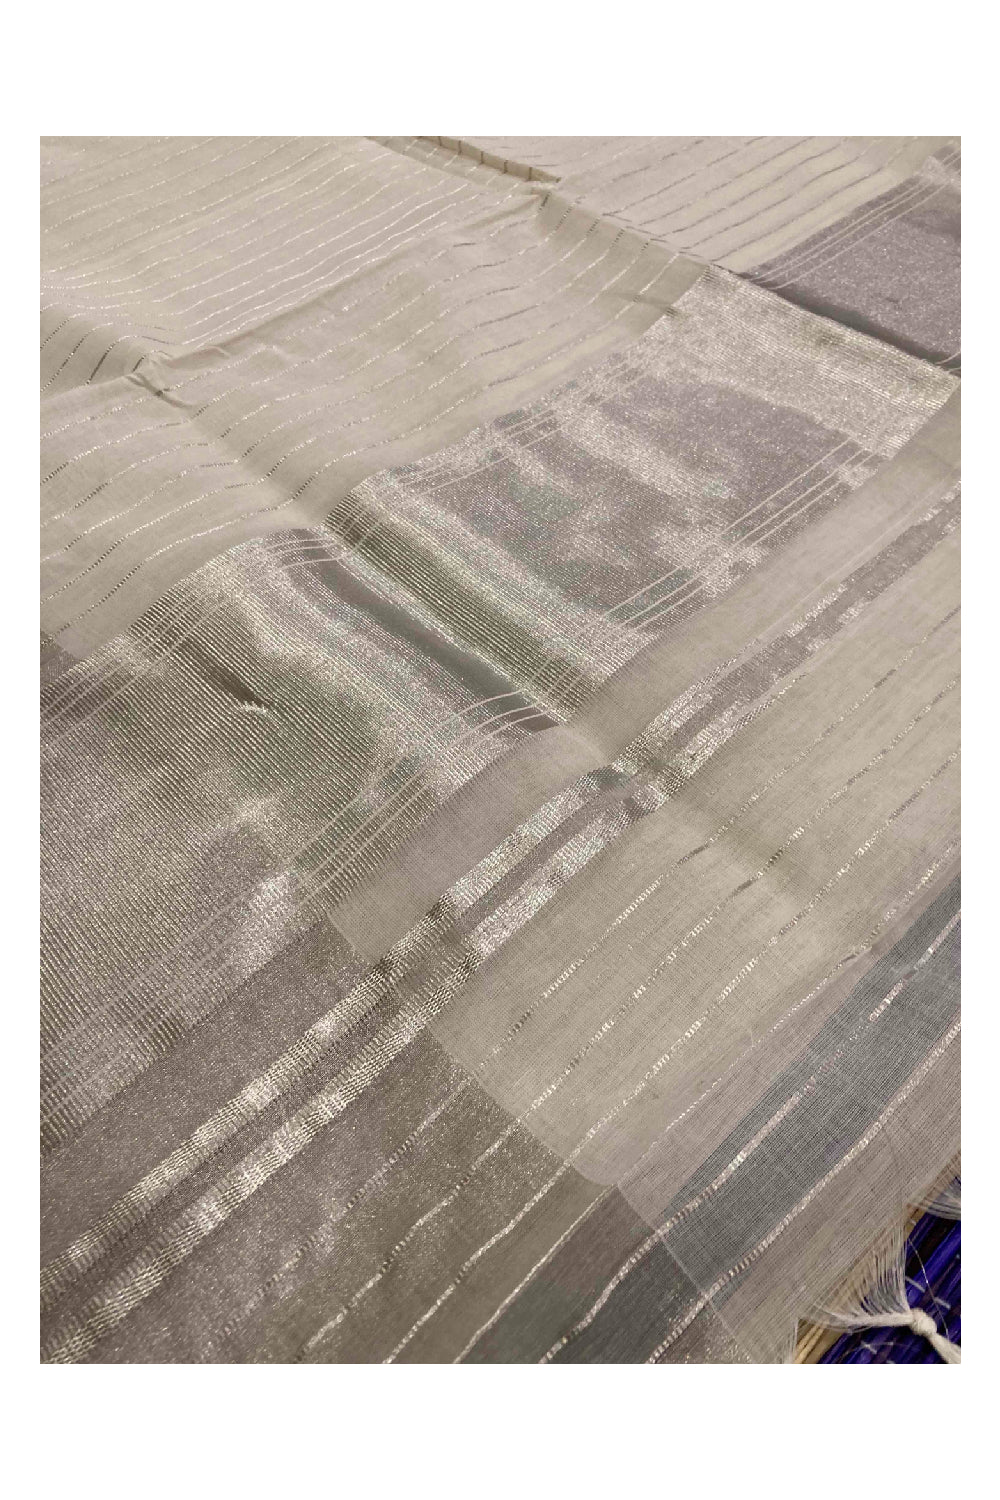 Southloom Kuthampully Handloom Cotton Saree with Silver Kasavu Stripes Body